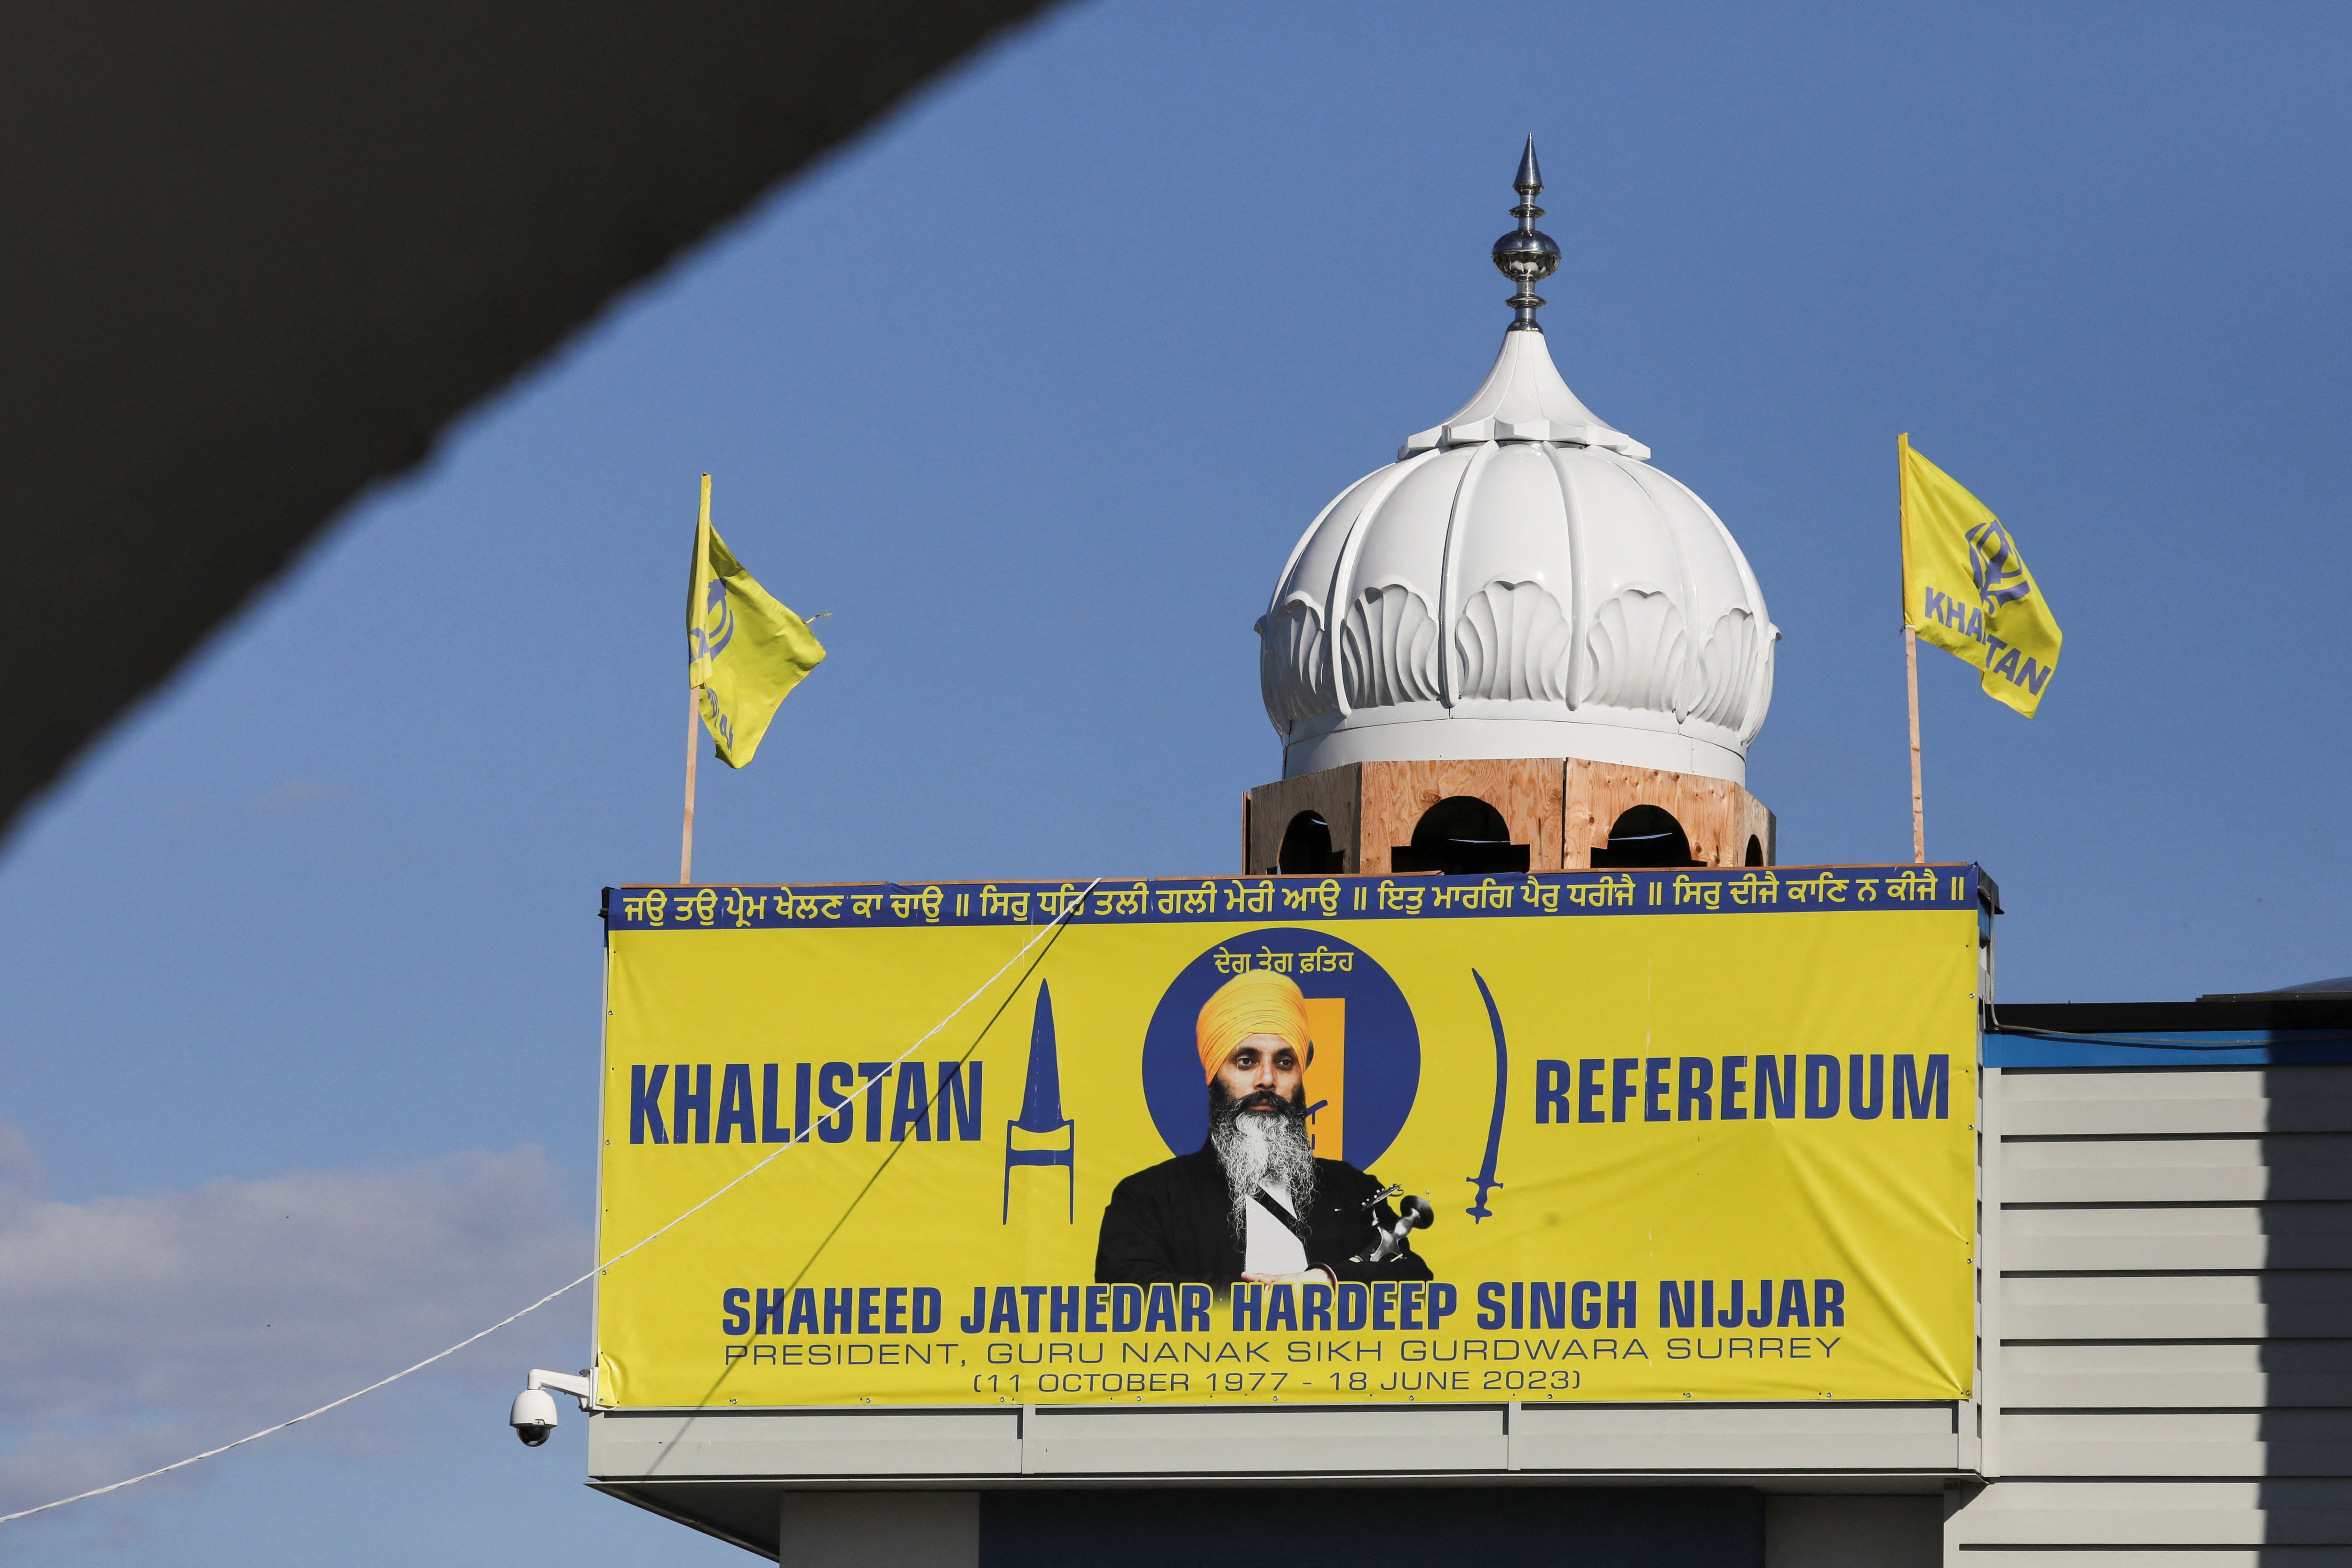 A banner with the image of Sikh leader Hardeep Singh Nijjar is seen at the Guru Nanak Sikh Gurdwara temple